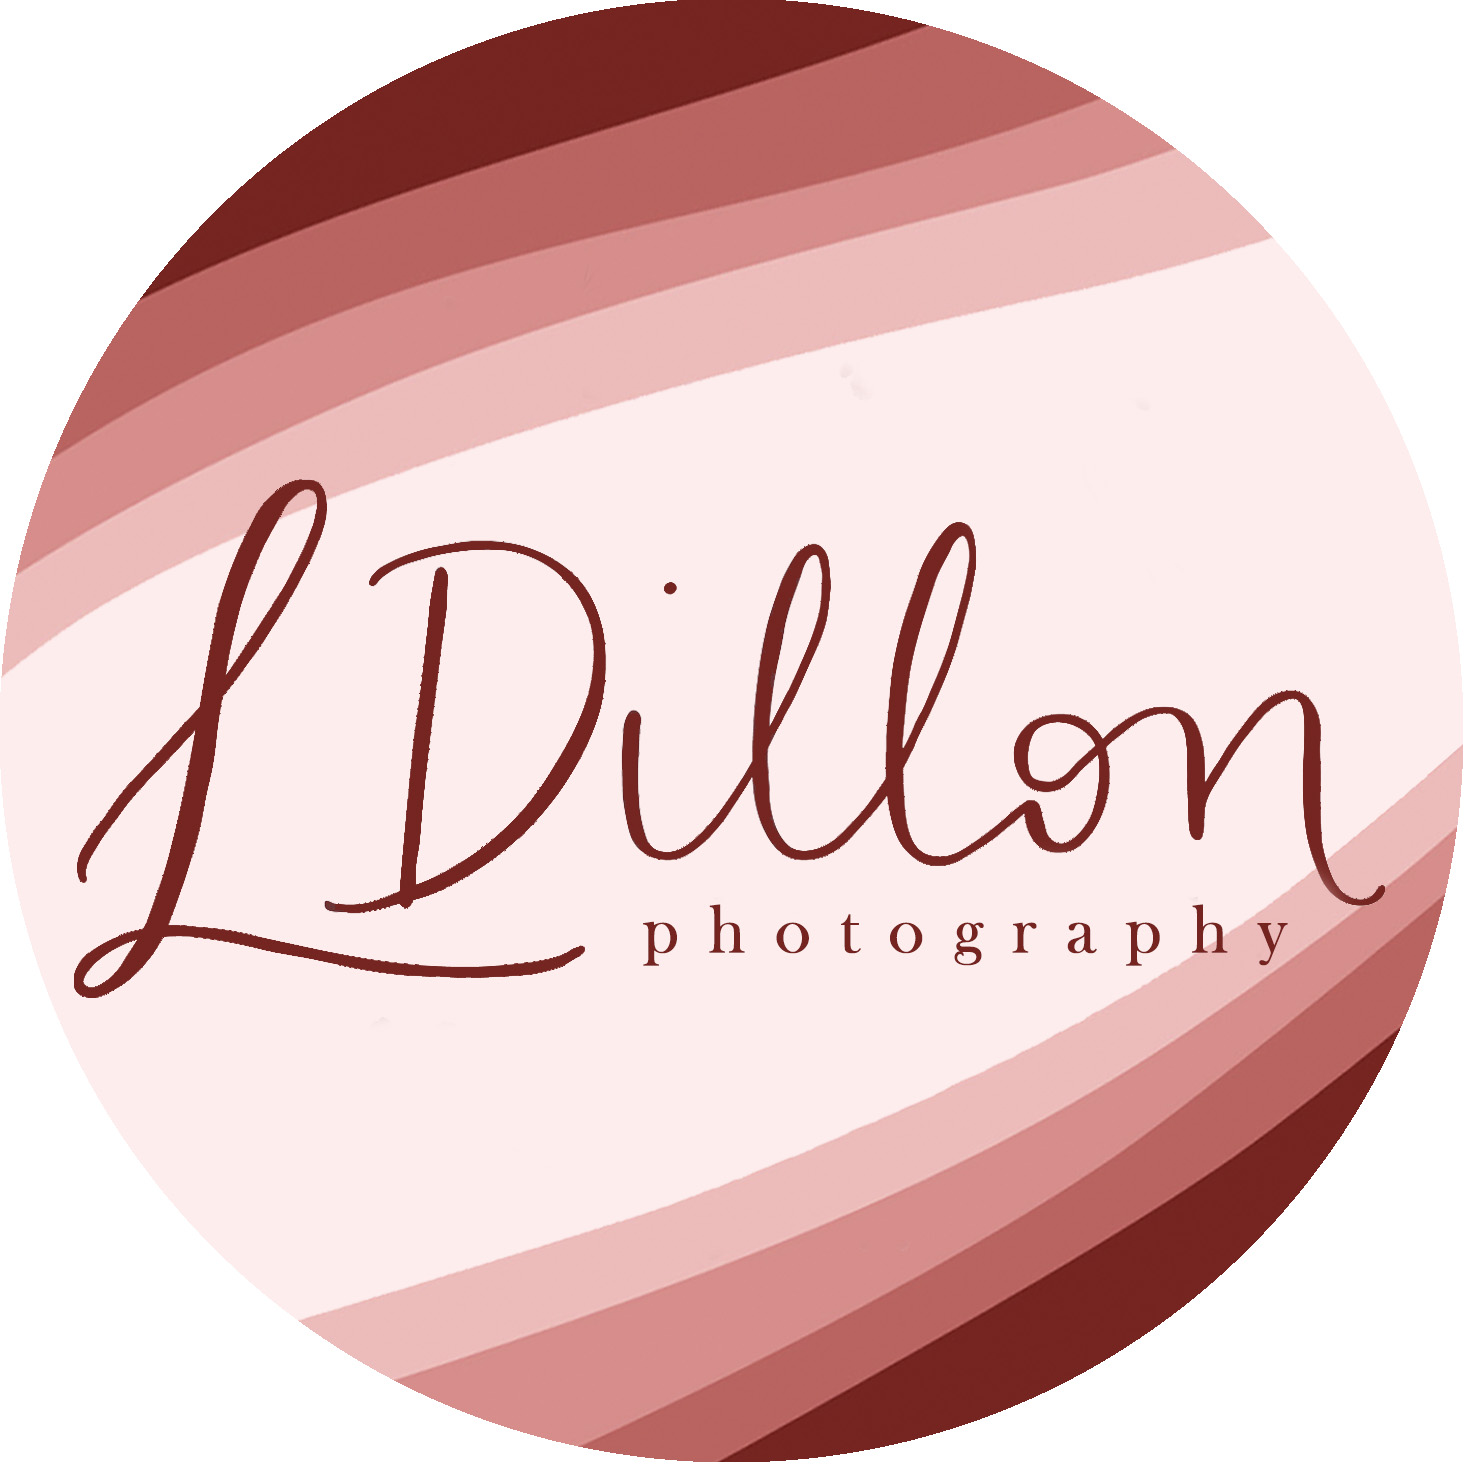 LDillon Photography